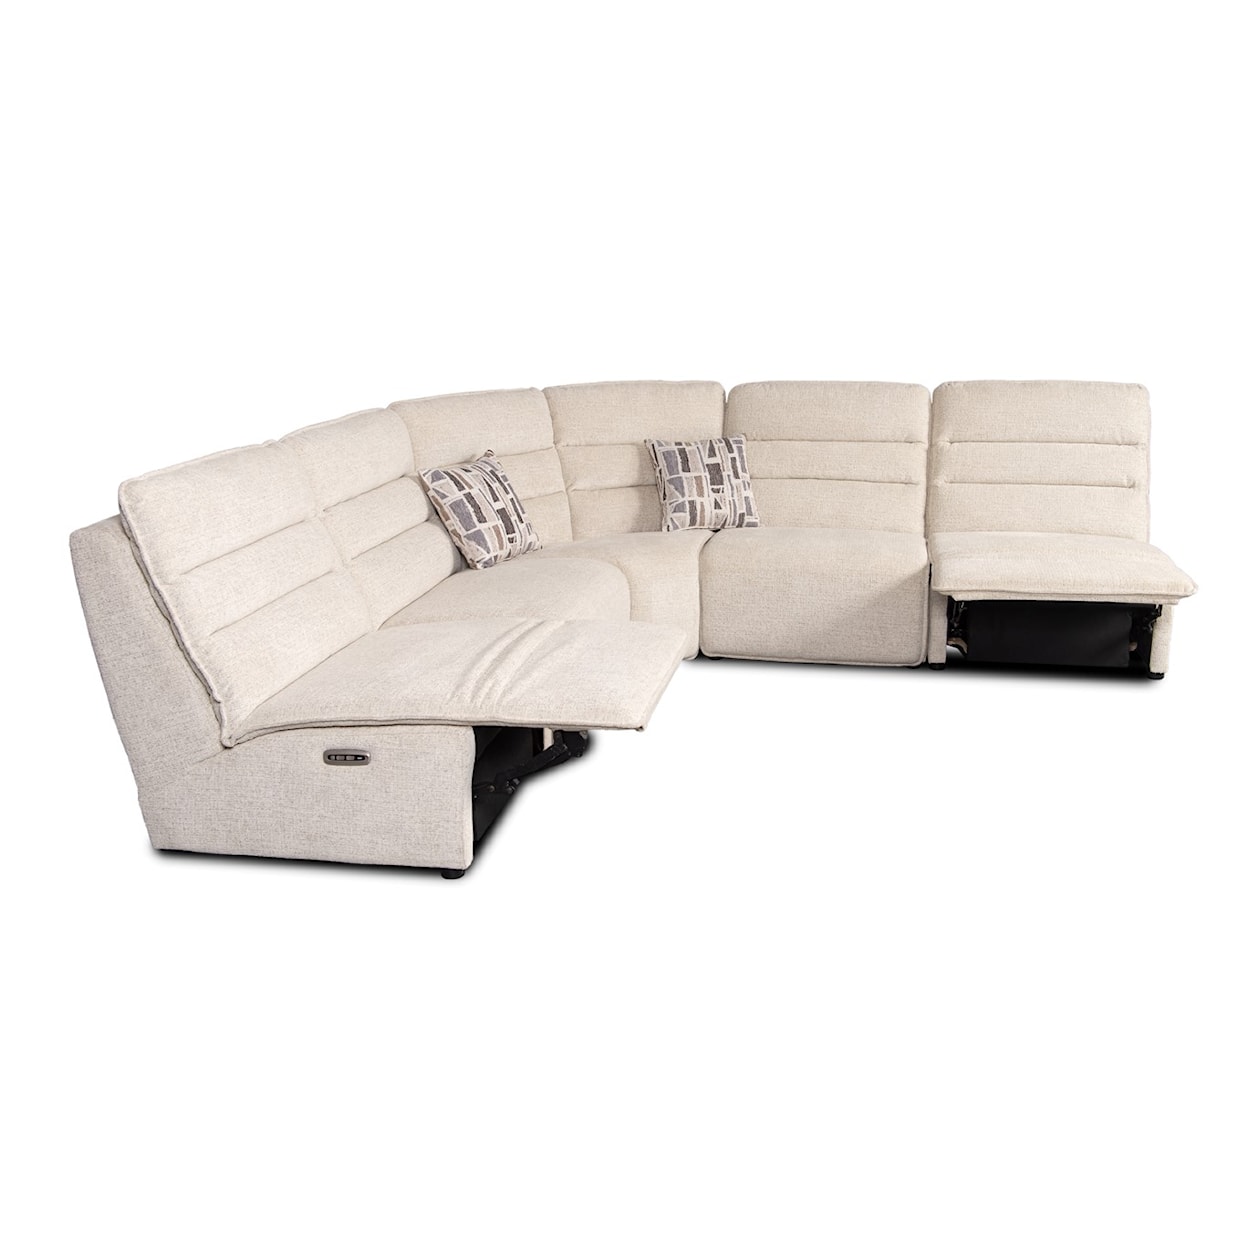 Sarah Randolph Designs 5035 Sectional Sofa